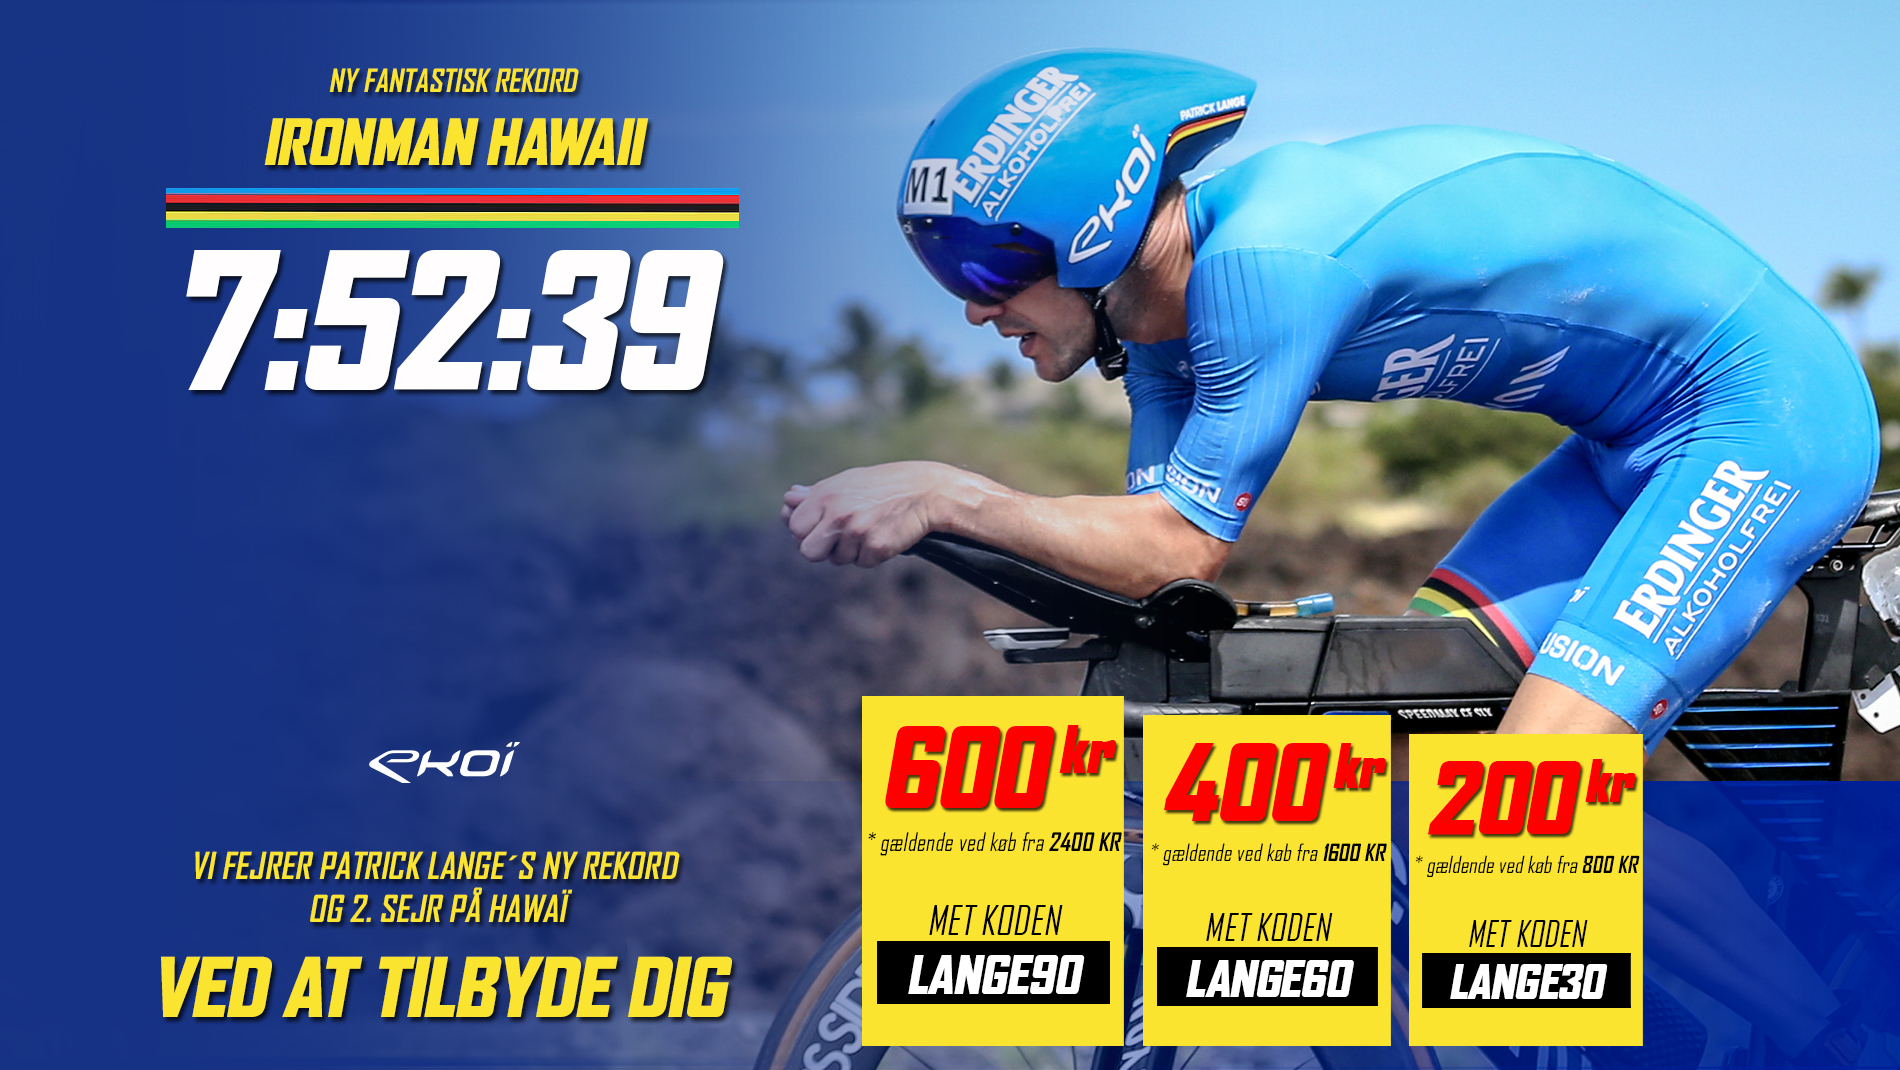 Patrick Lange nouveau record IronMan Hawai